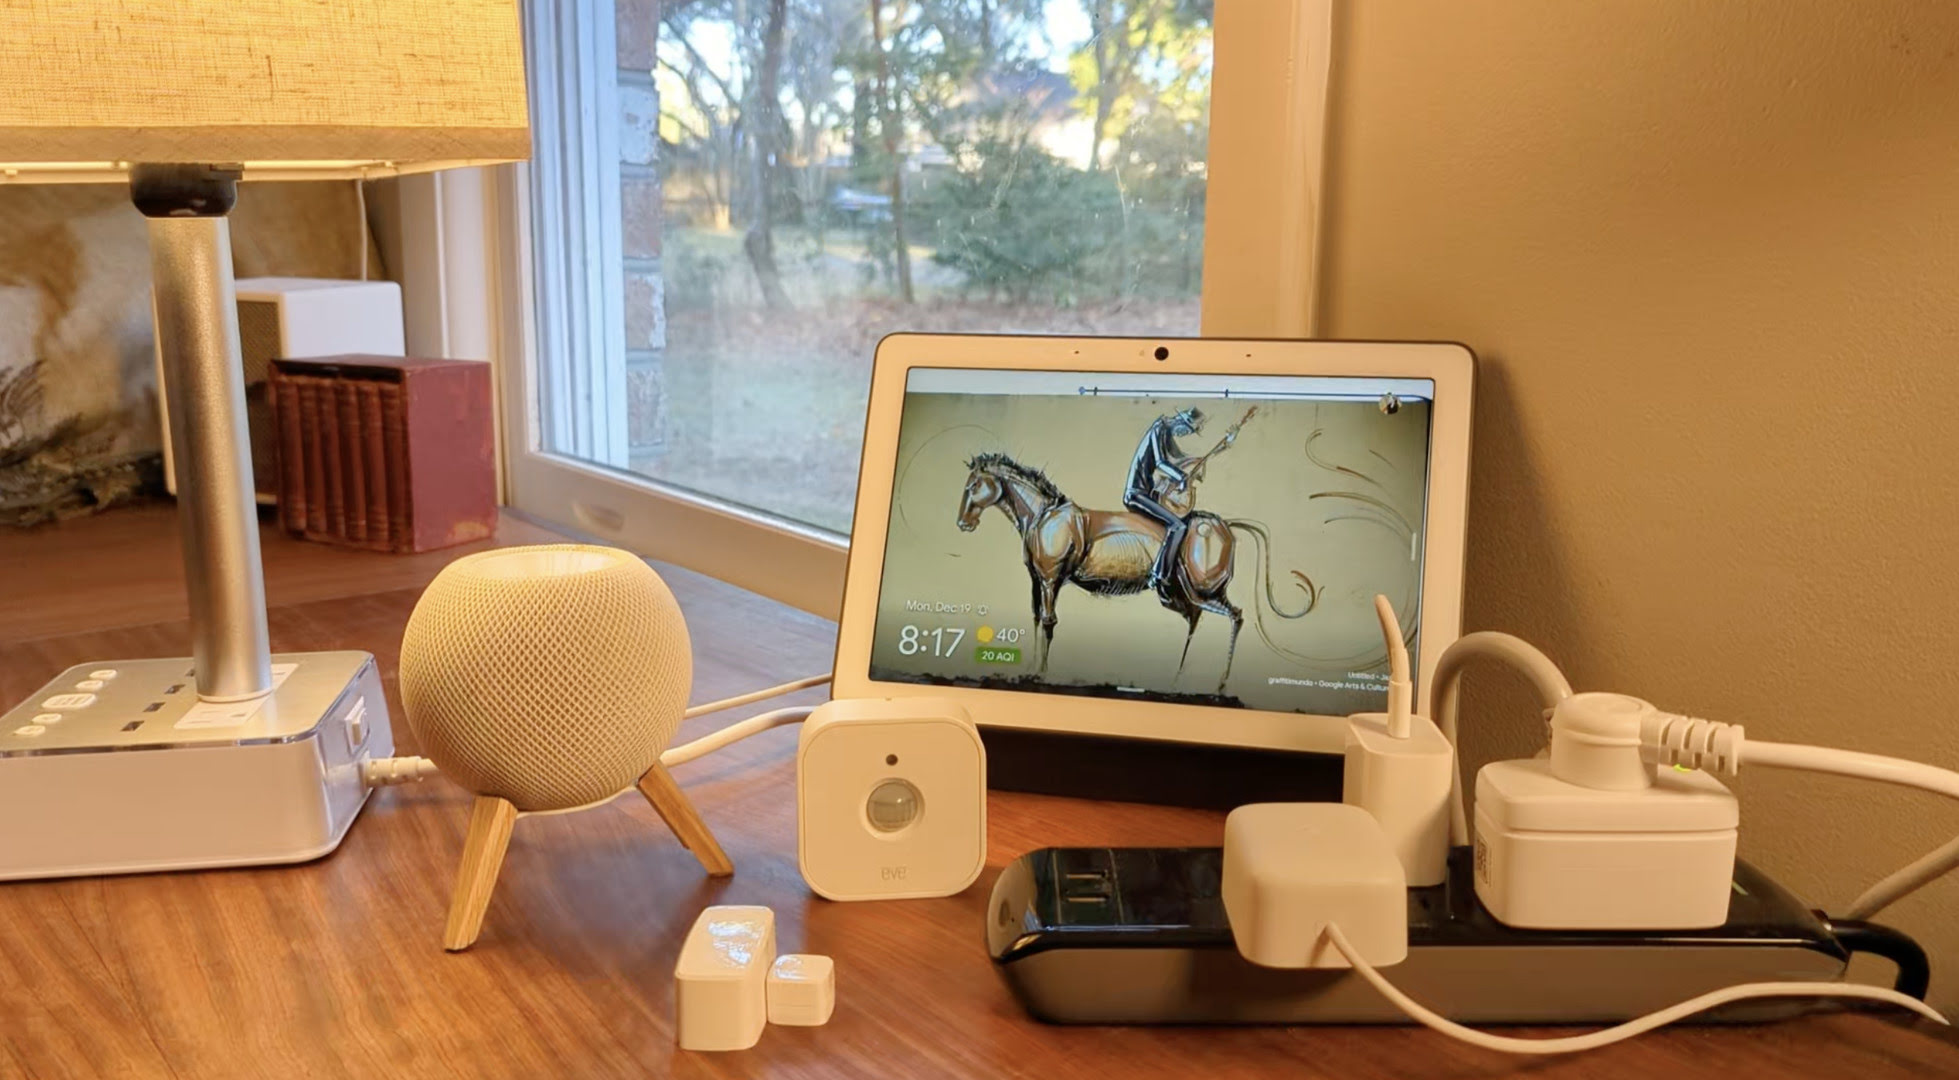 Google Home smart plug technology, installation, and setup